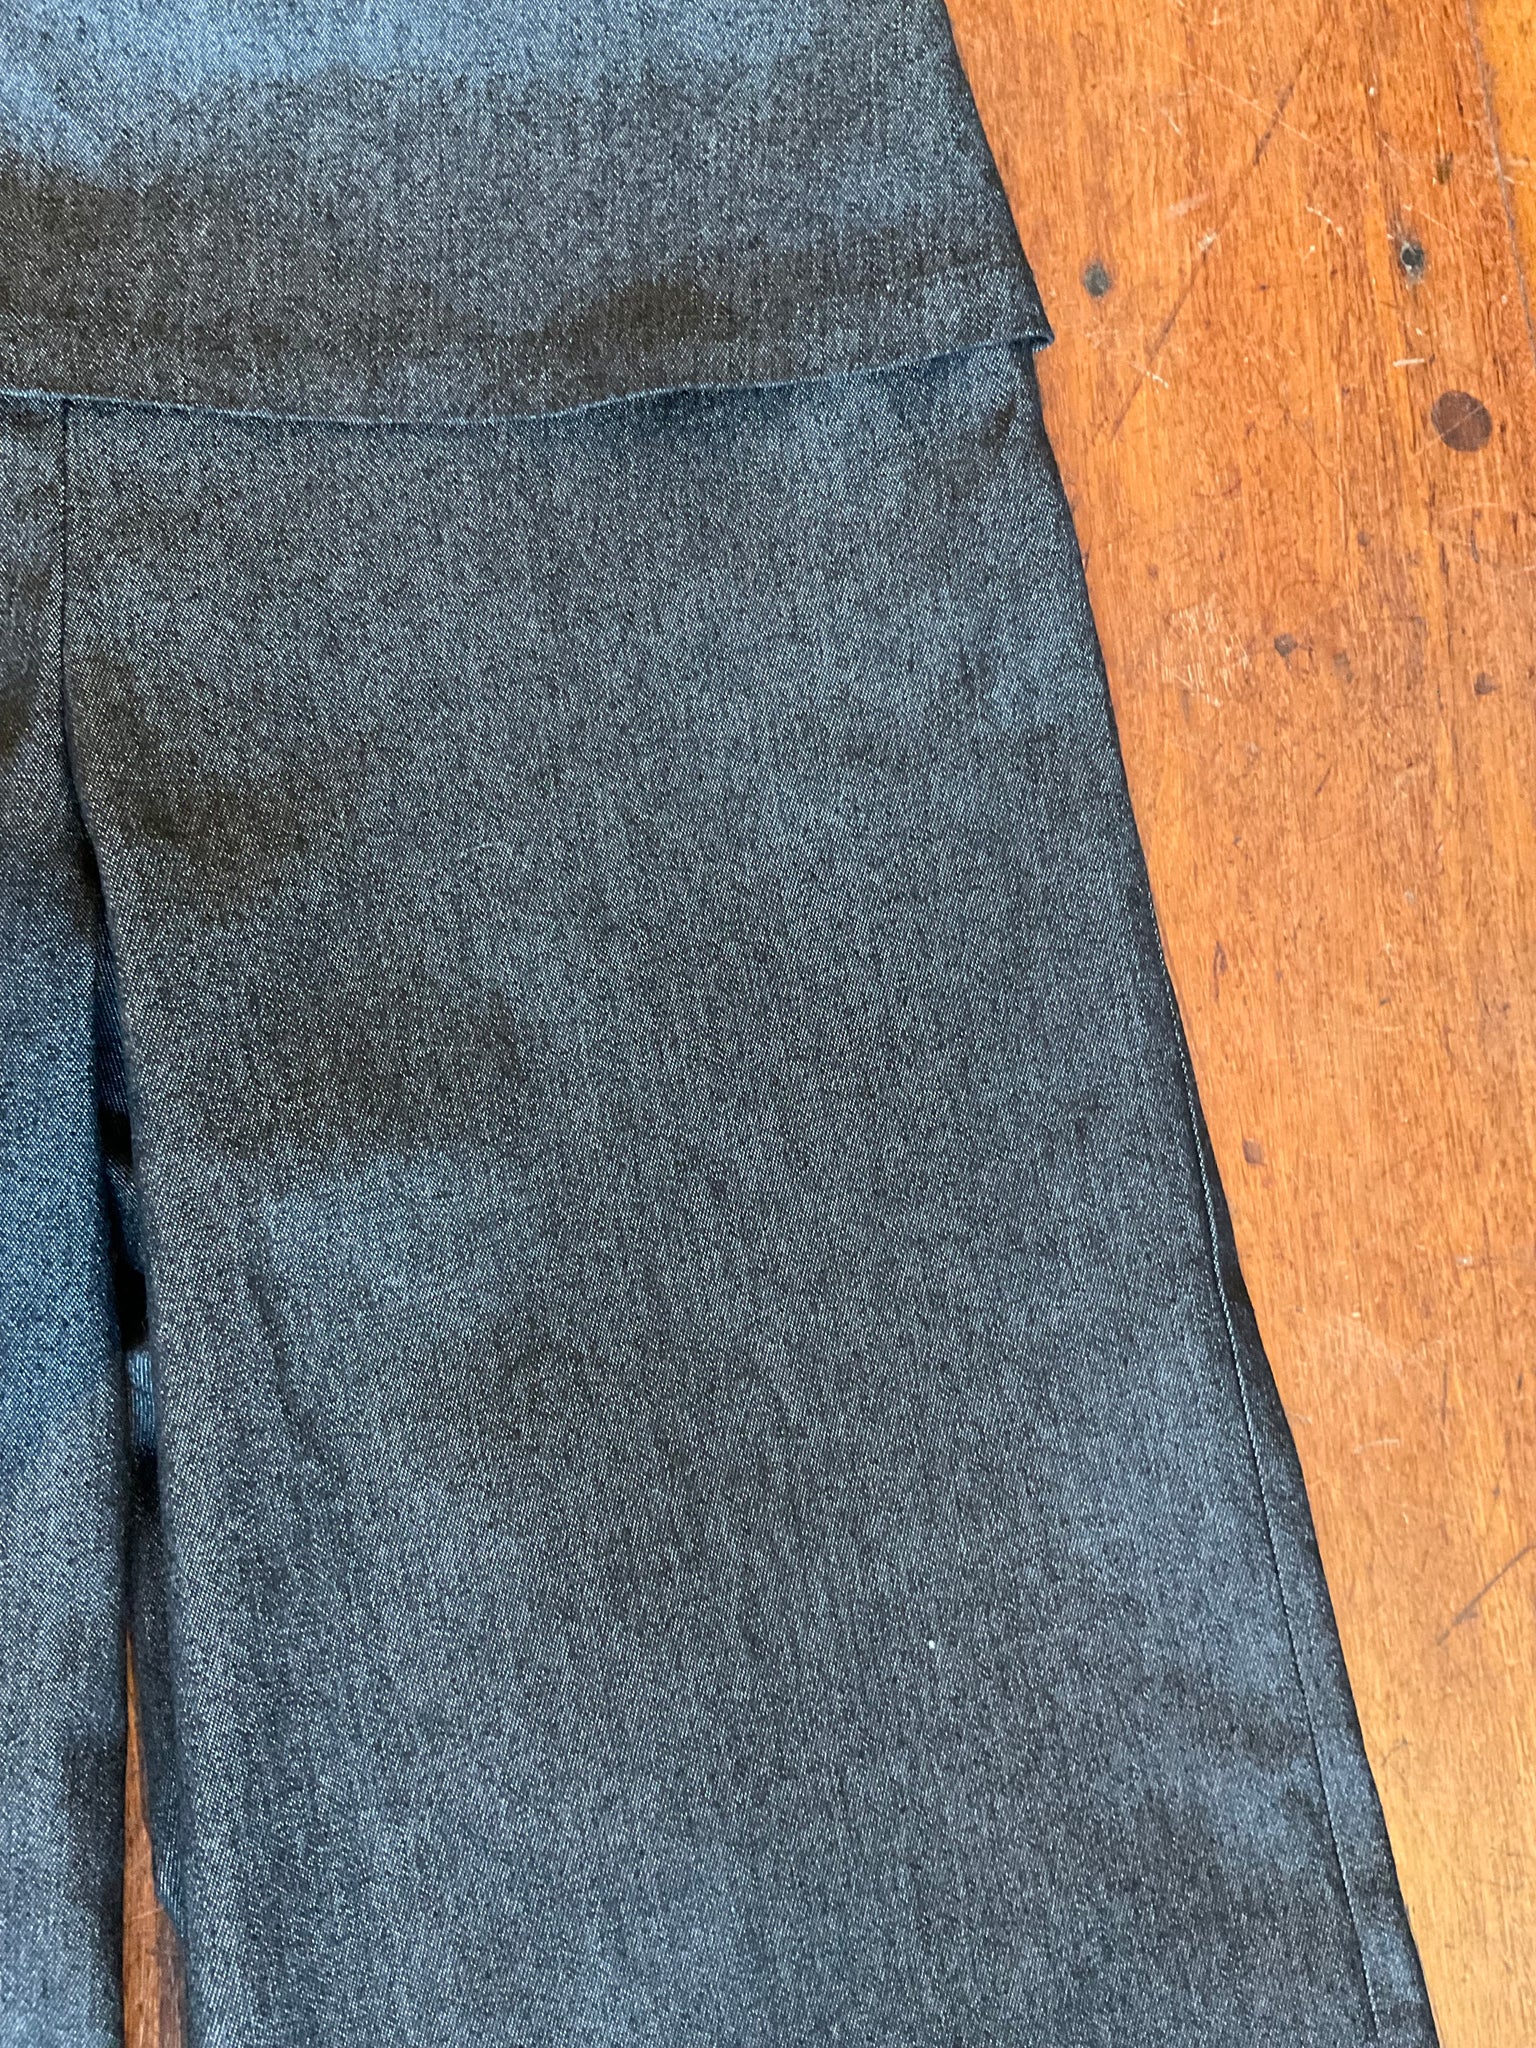 MiM Charcoal Denim Fold Over Pants